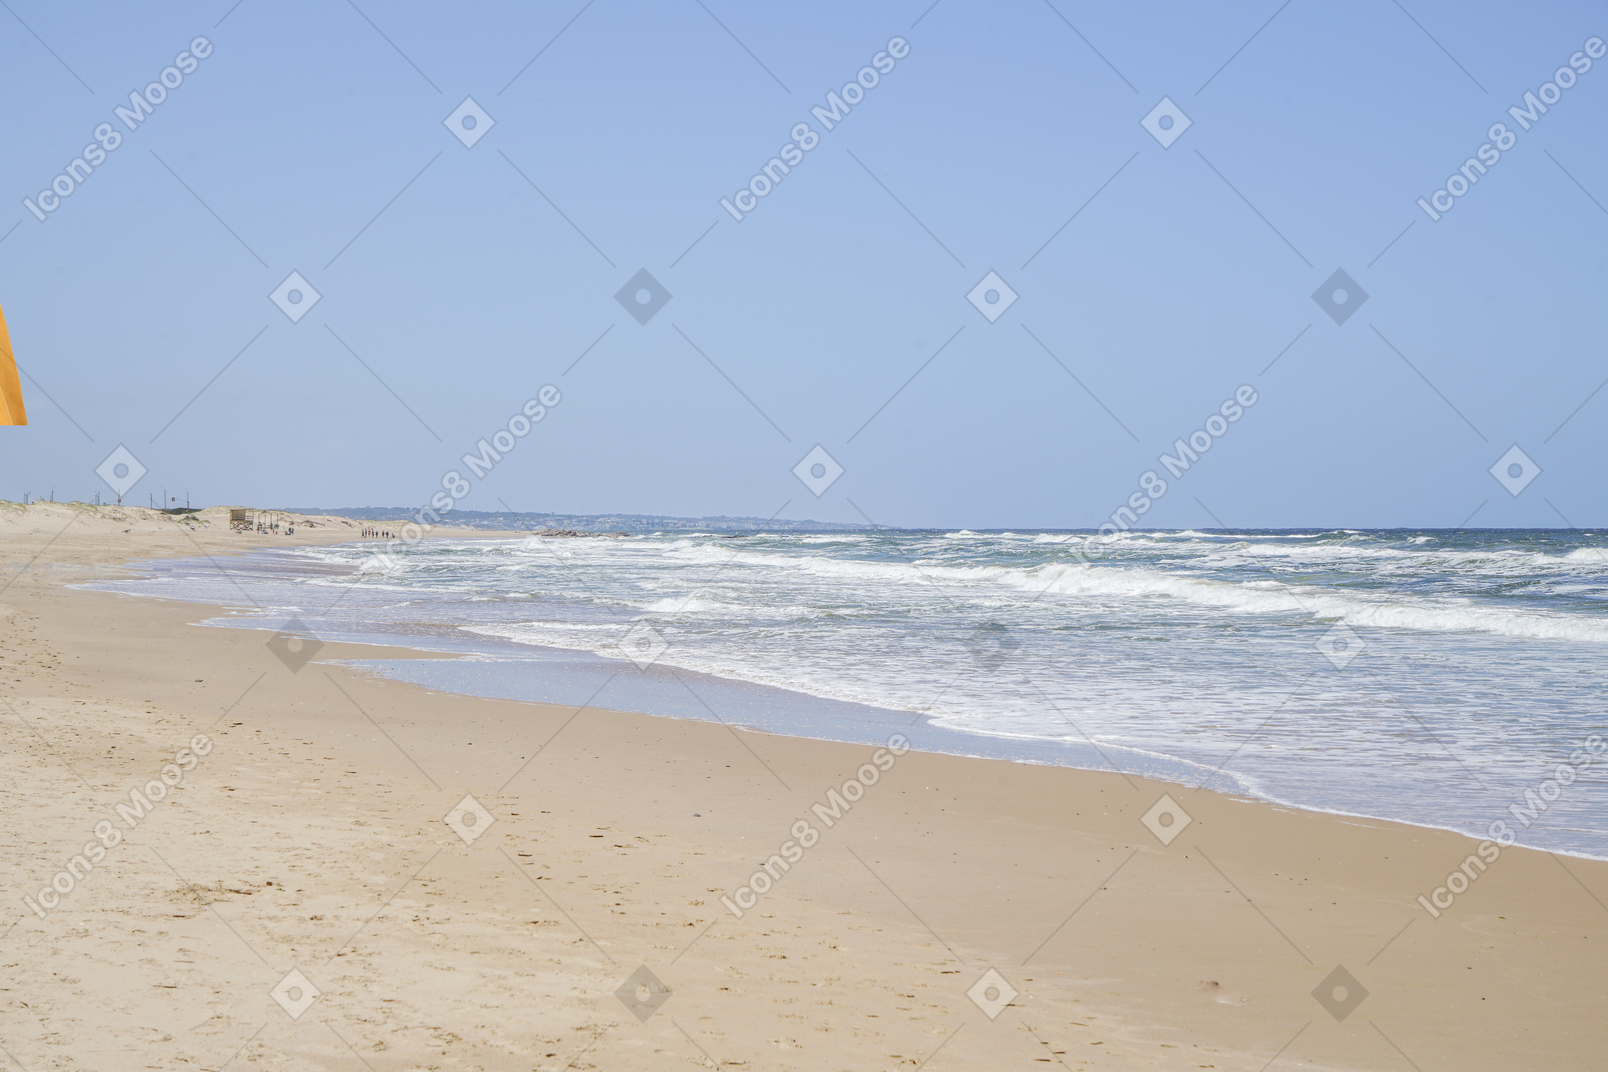 Sandy beach background